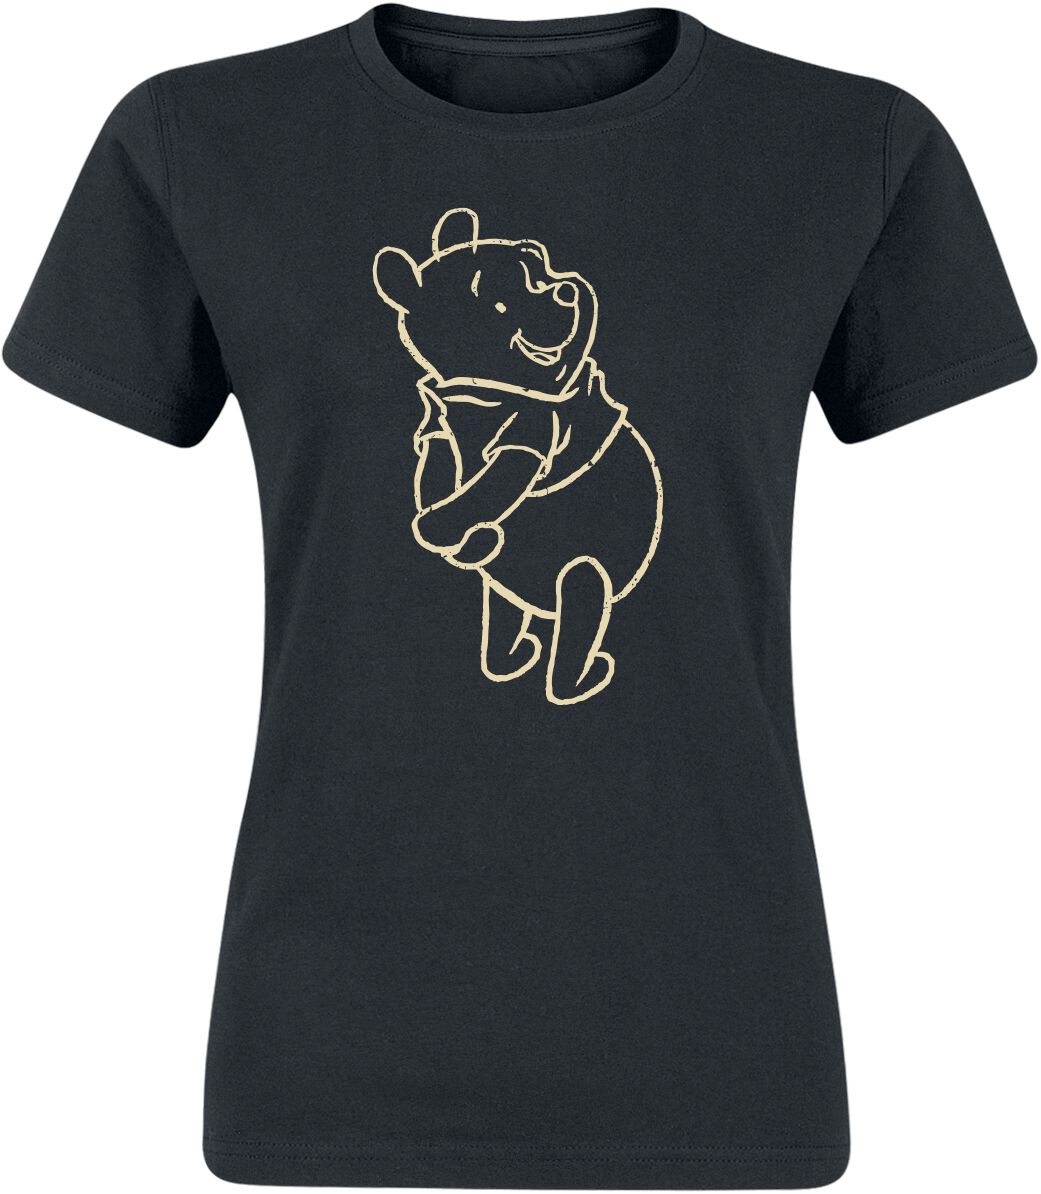 Winnie the Pooh Outline pose T-Shirt black